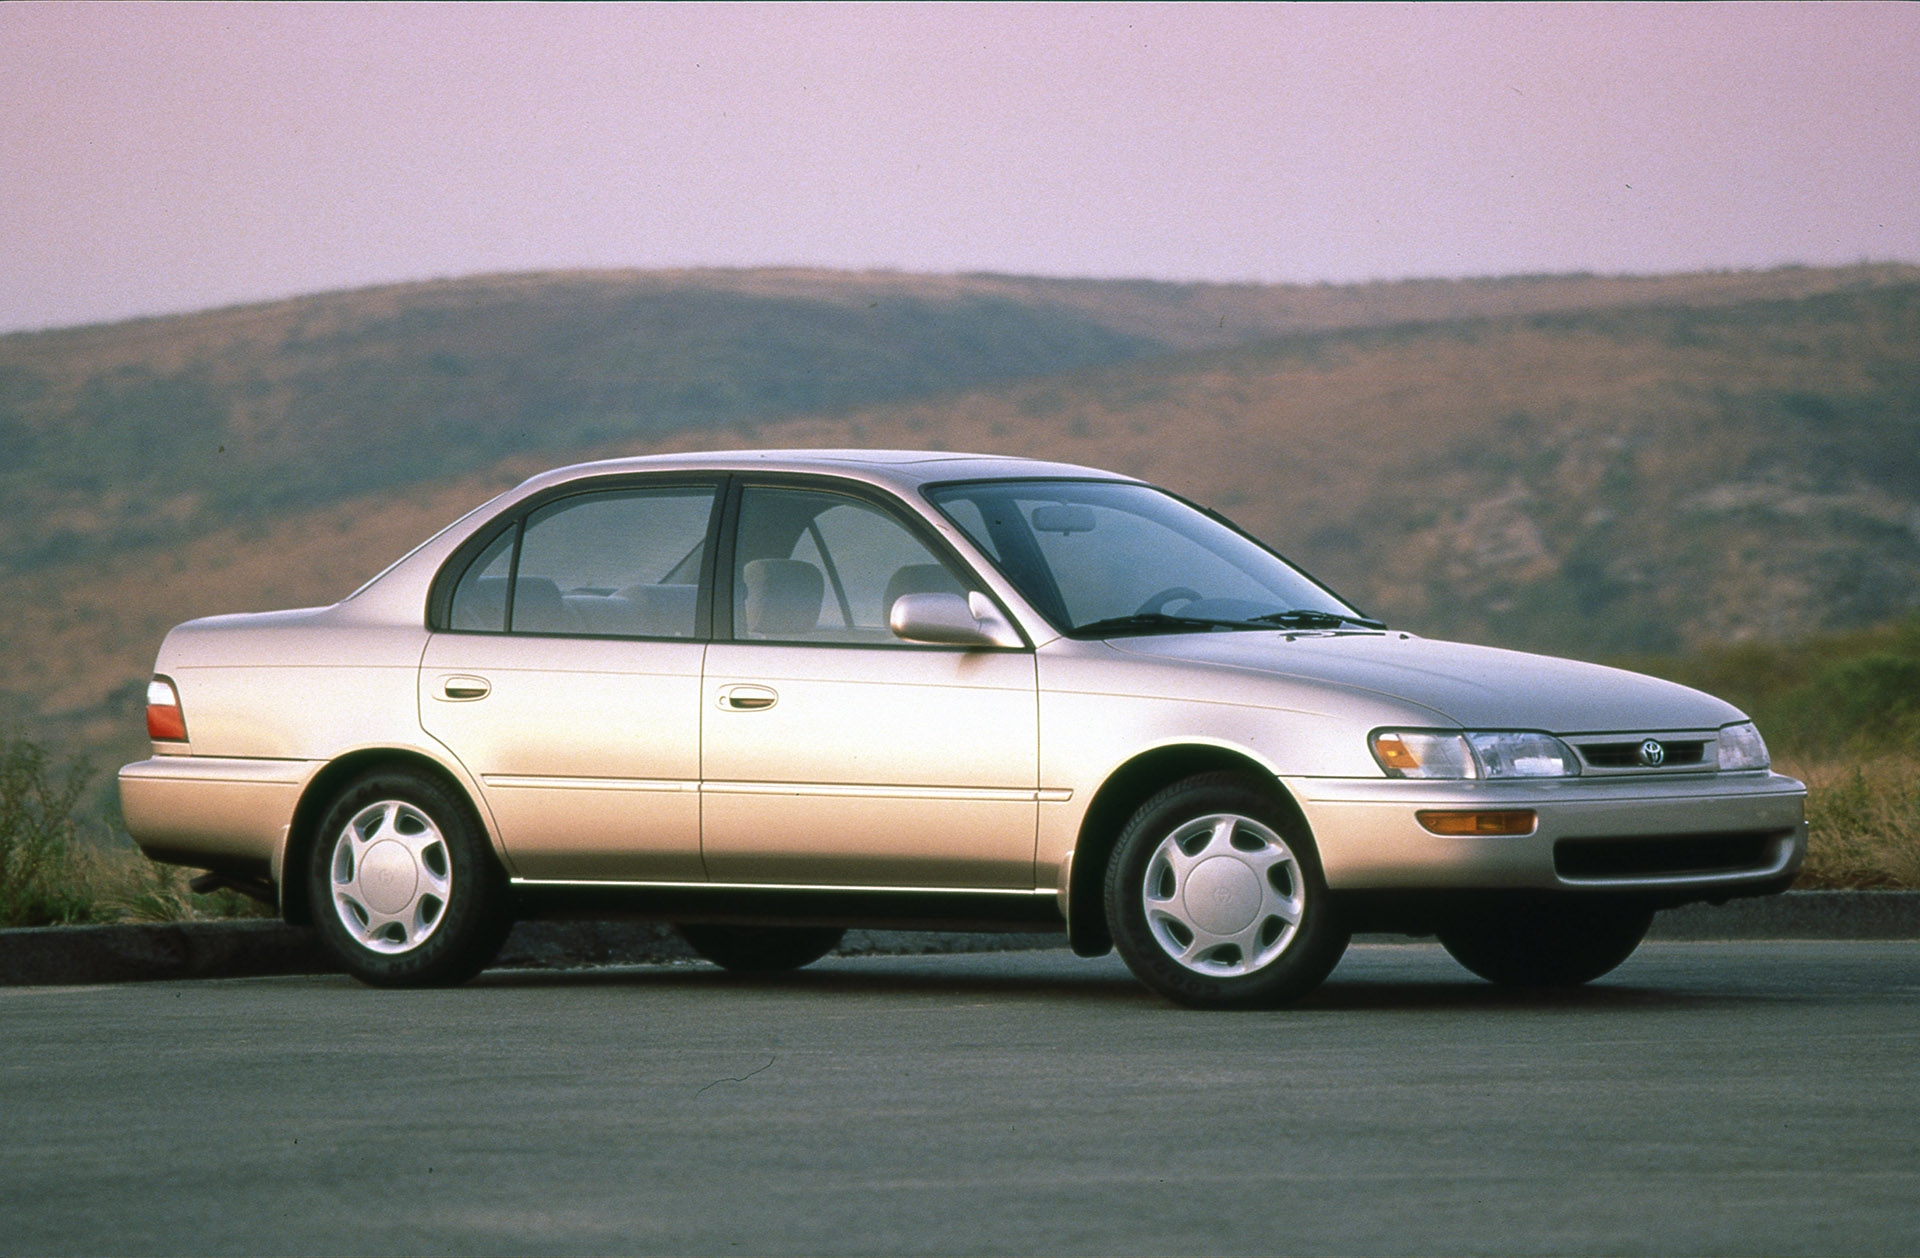 USA - The 7th Generation Corolla (1993 - 1997)